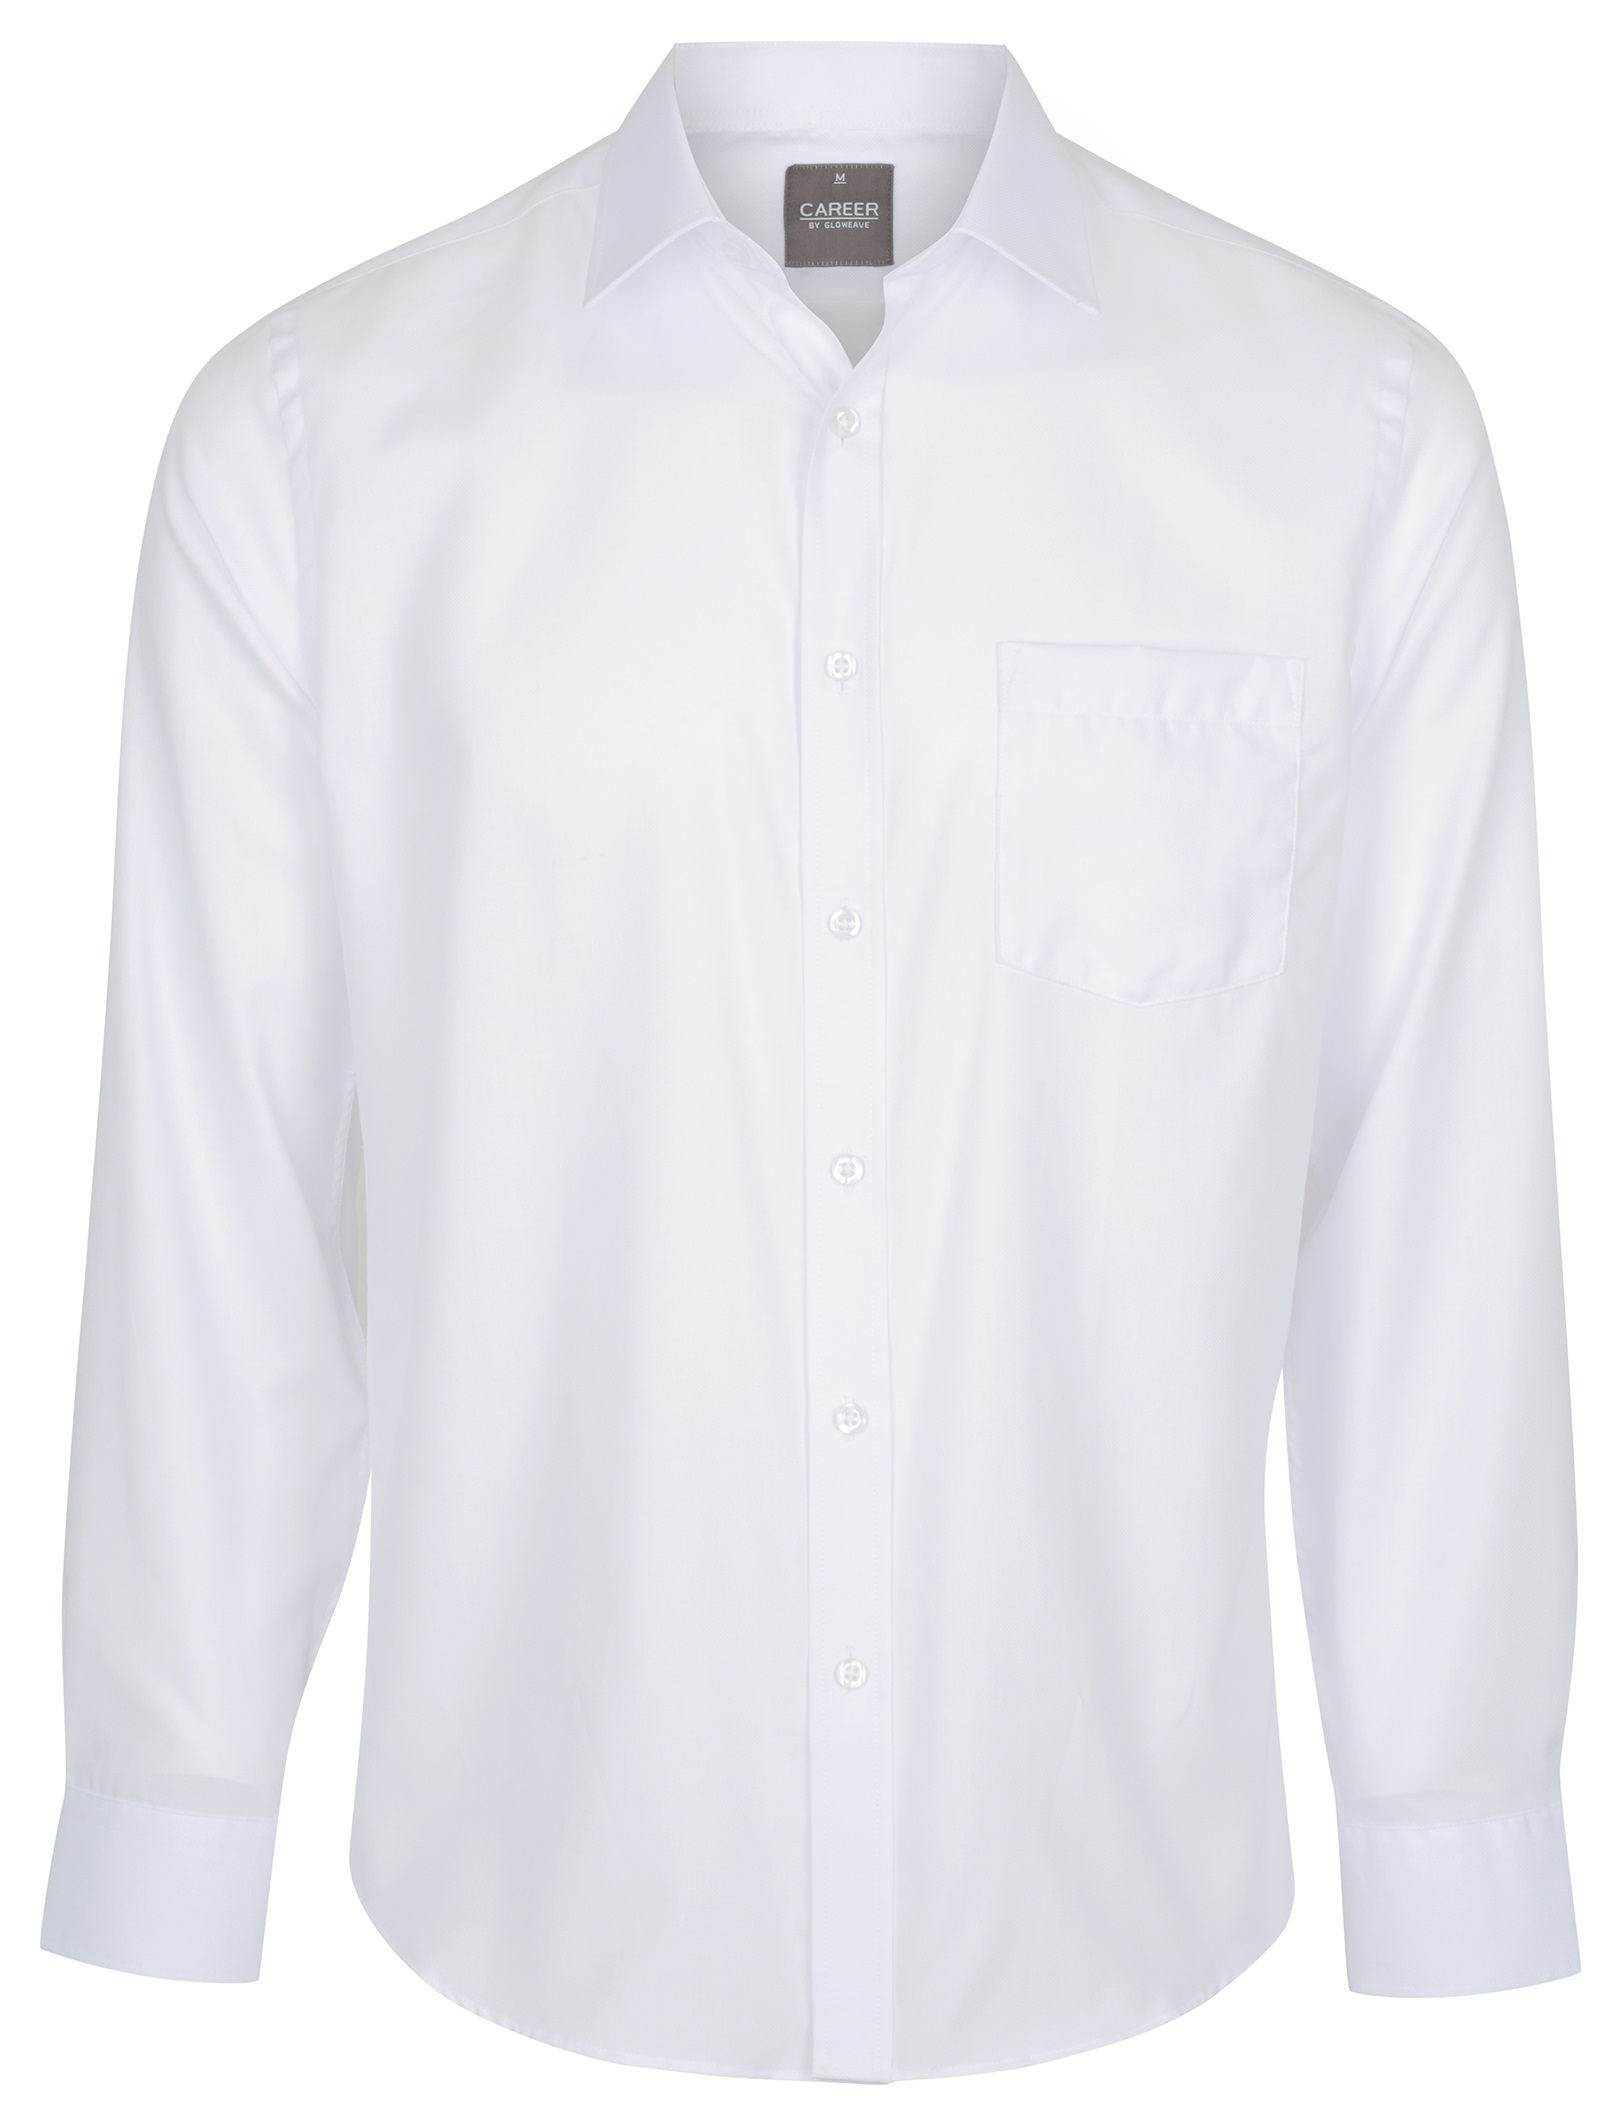 ultimate white mens shirt